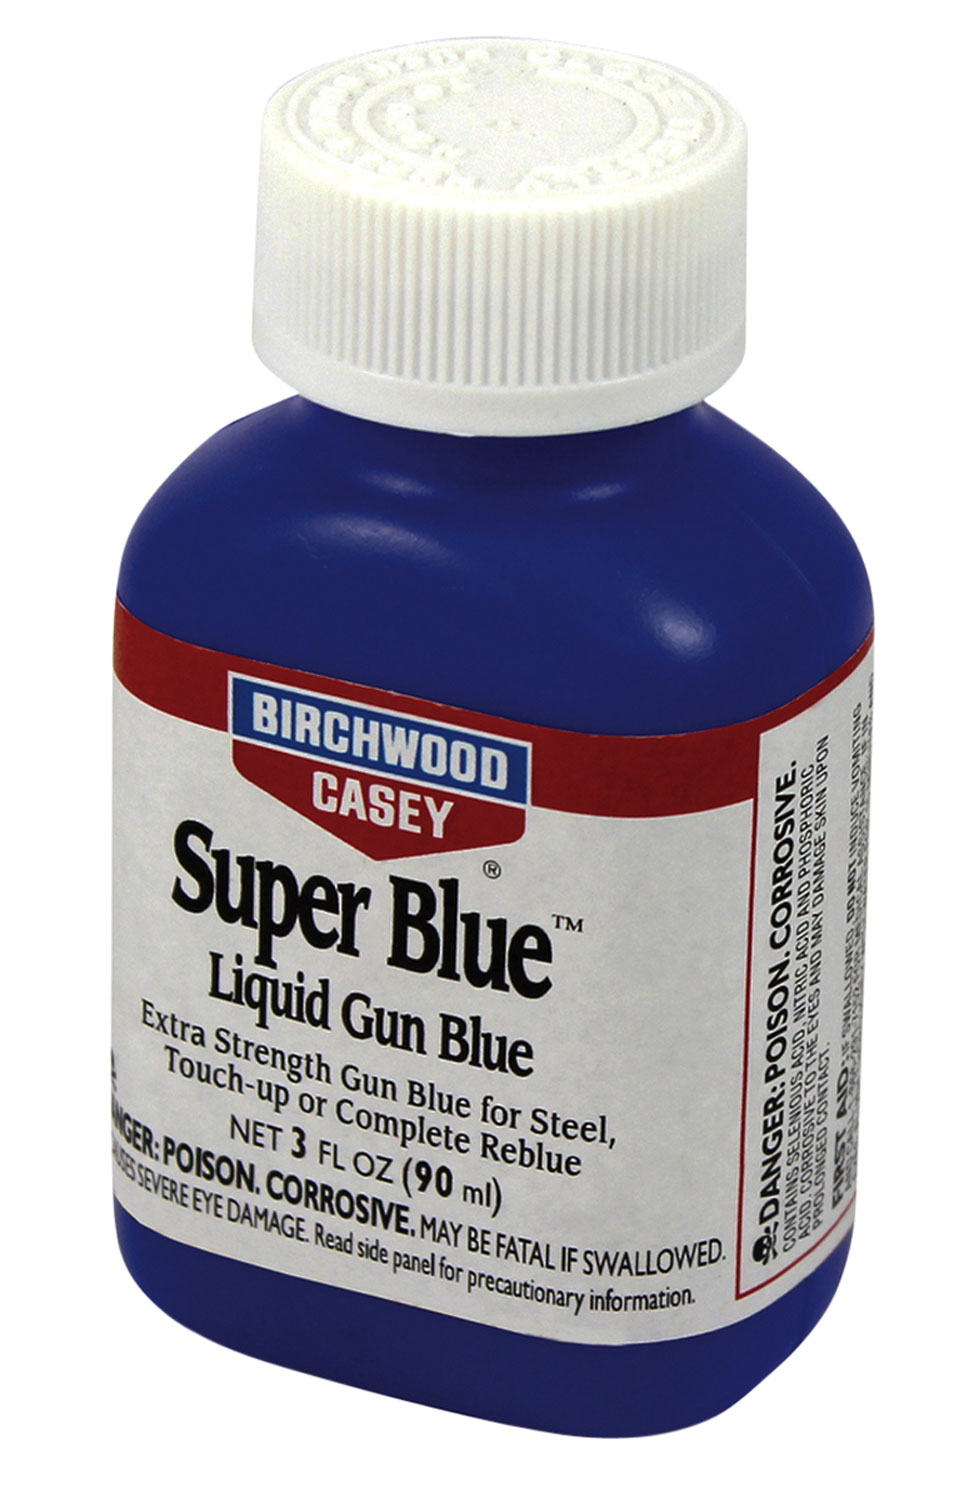 Birchwood Casey 13425 Super Blue Liquid Gun Blue 3 oz Resealable Container